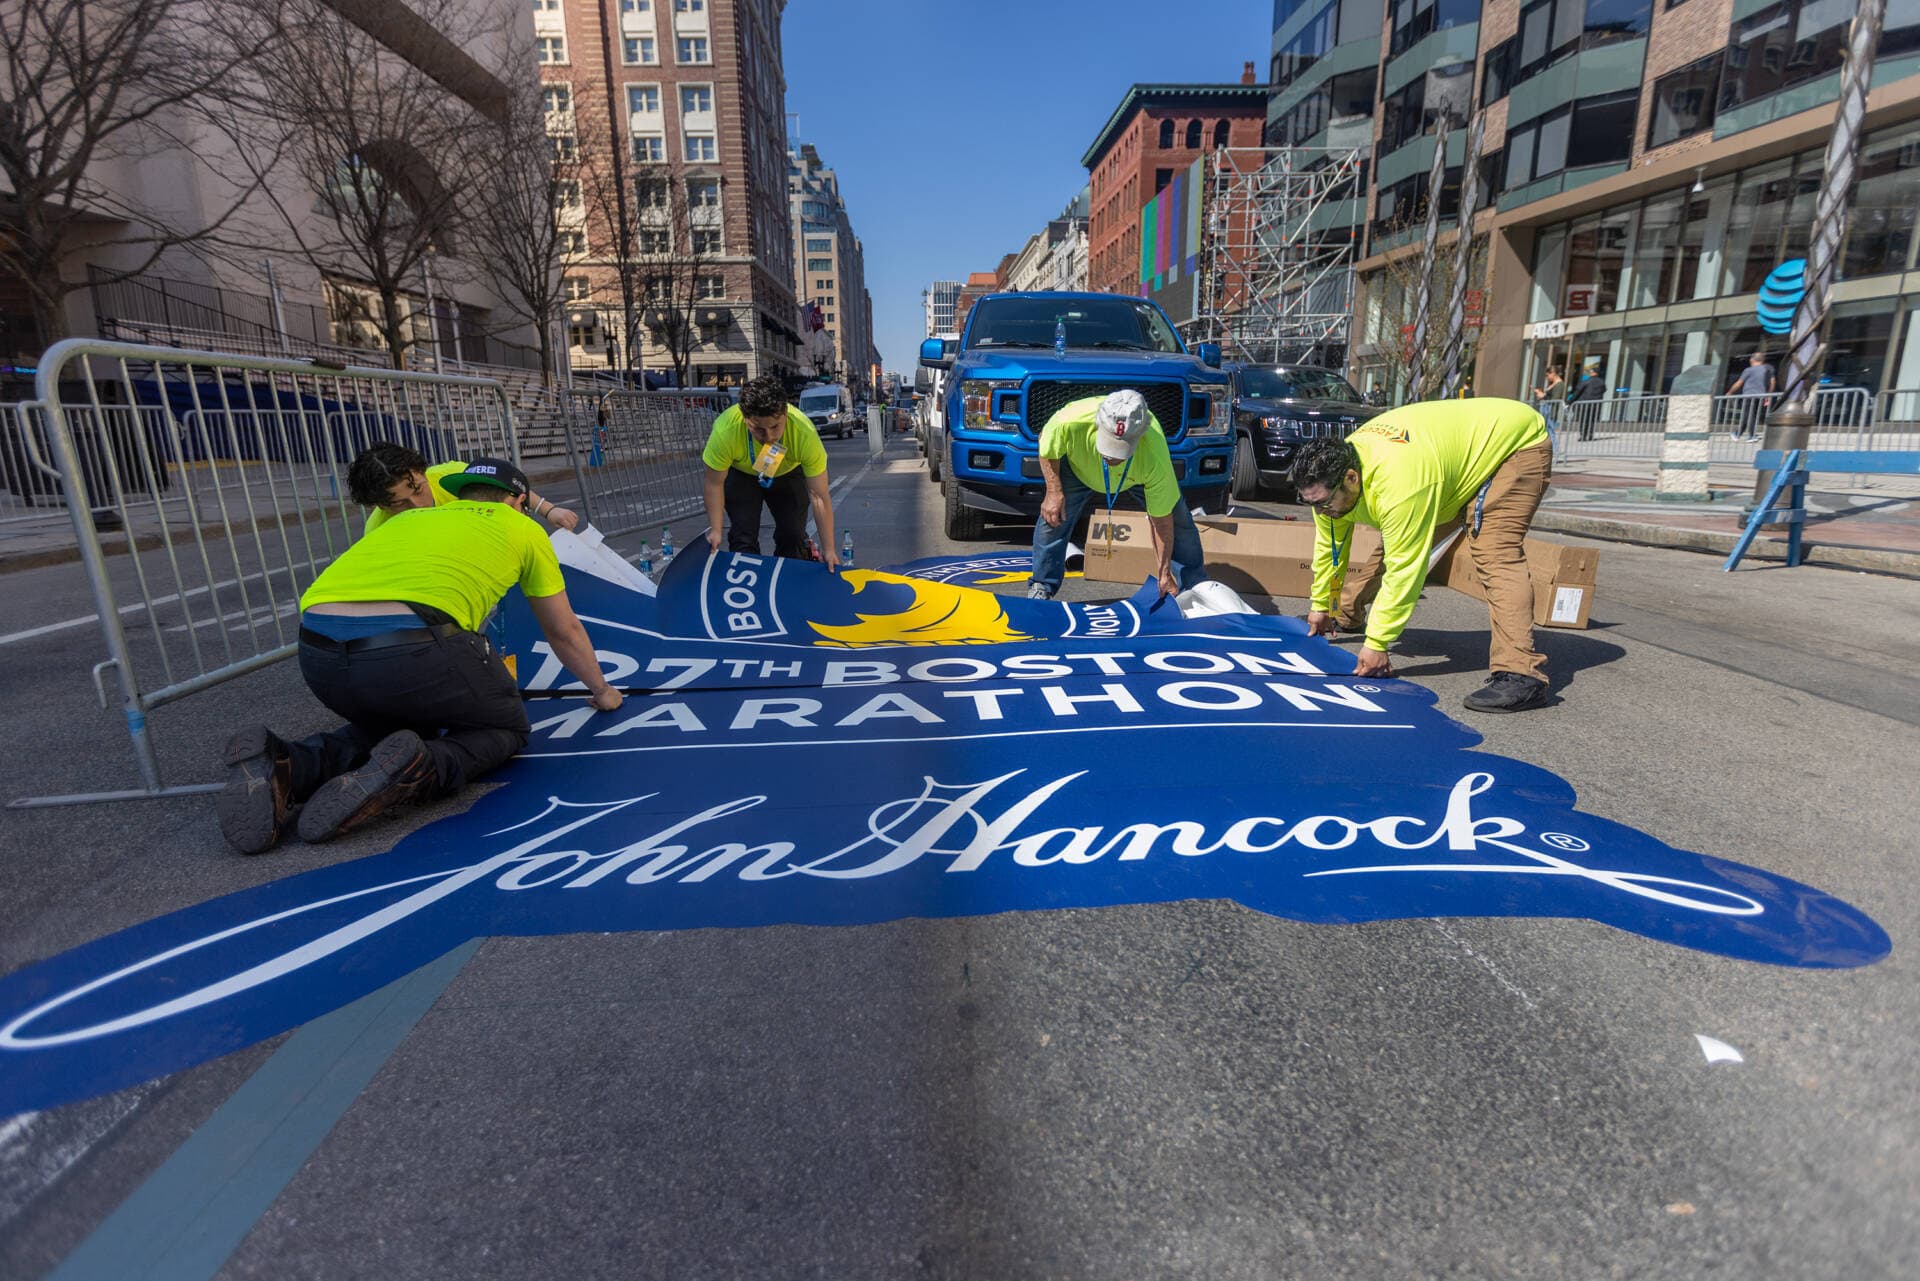 On Boylston Street, workers lay down a decal with the sponsor John Hancock's logo ahead of the 127th Boston Marathon. (Jesse Costa/WBUR)